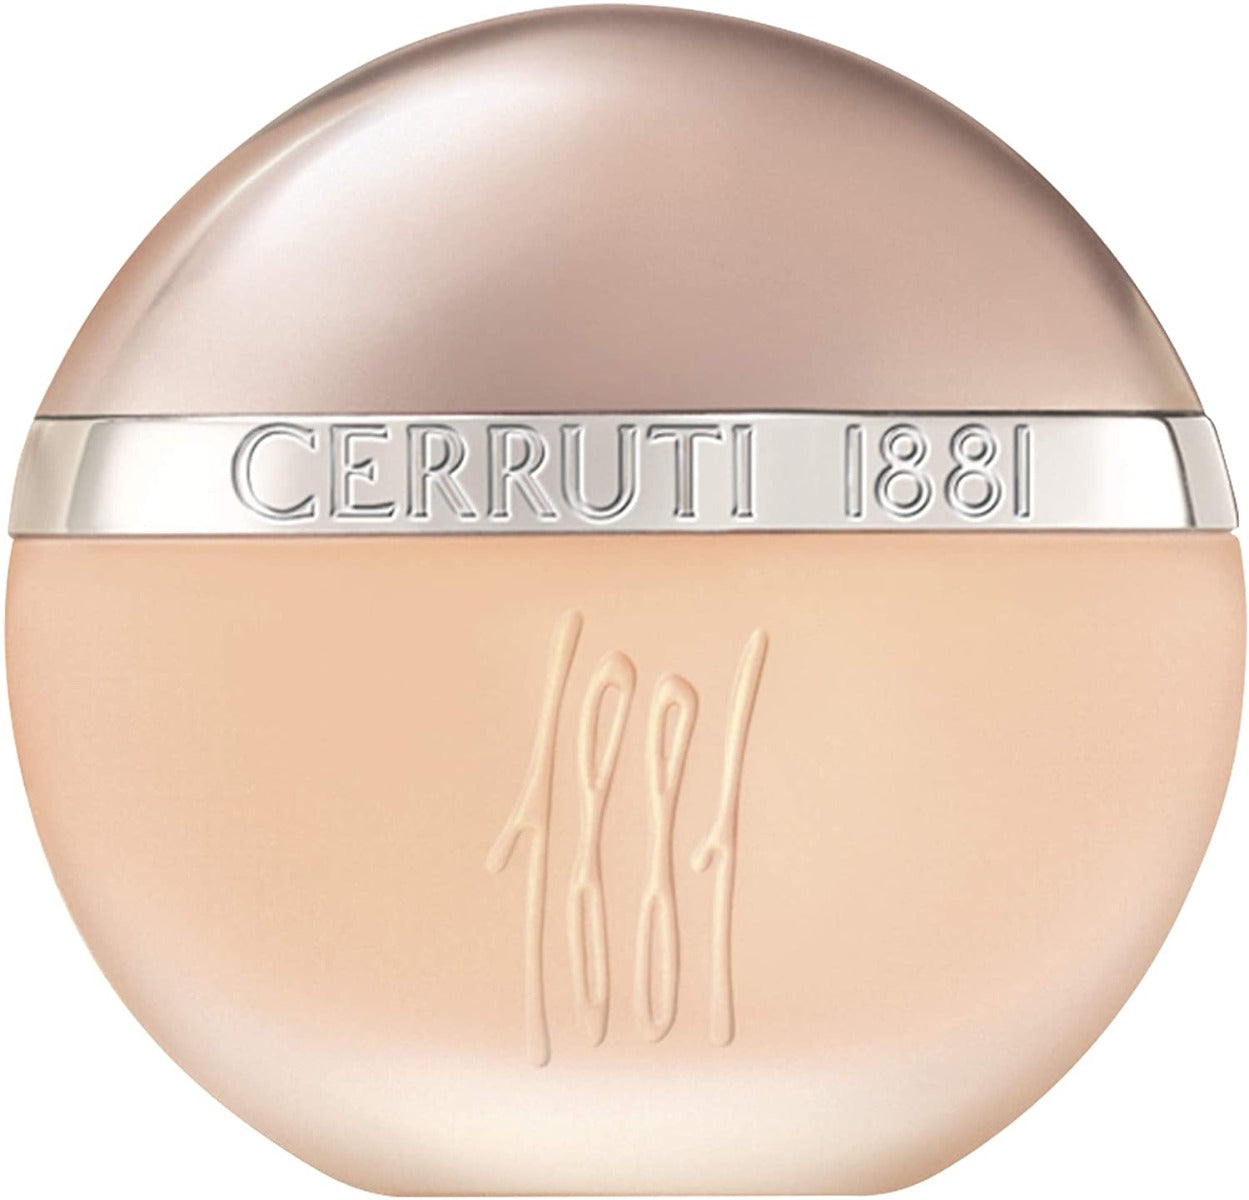 Cerruti 1881 Perfume For Women EDT 100 ml - samawa perfumes 